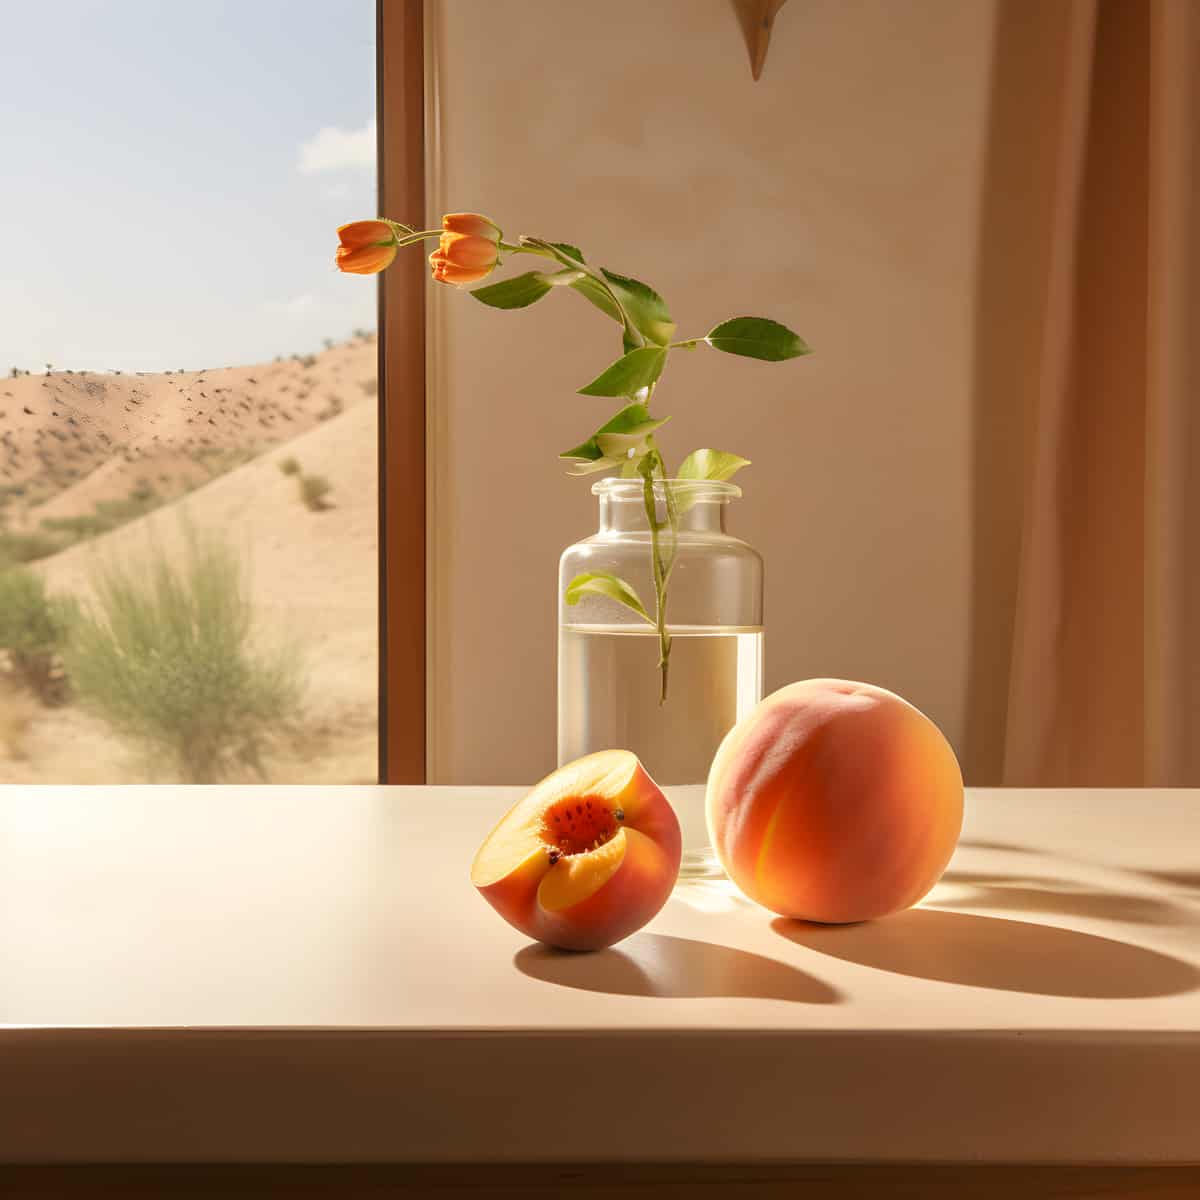 Desert Peach on a kitchen counter